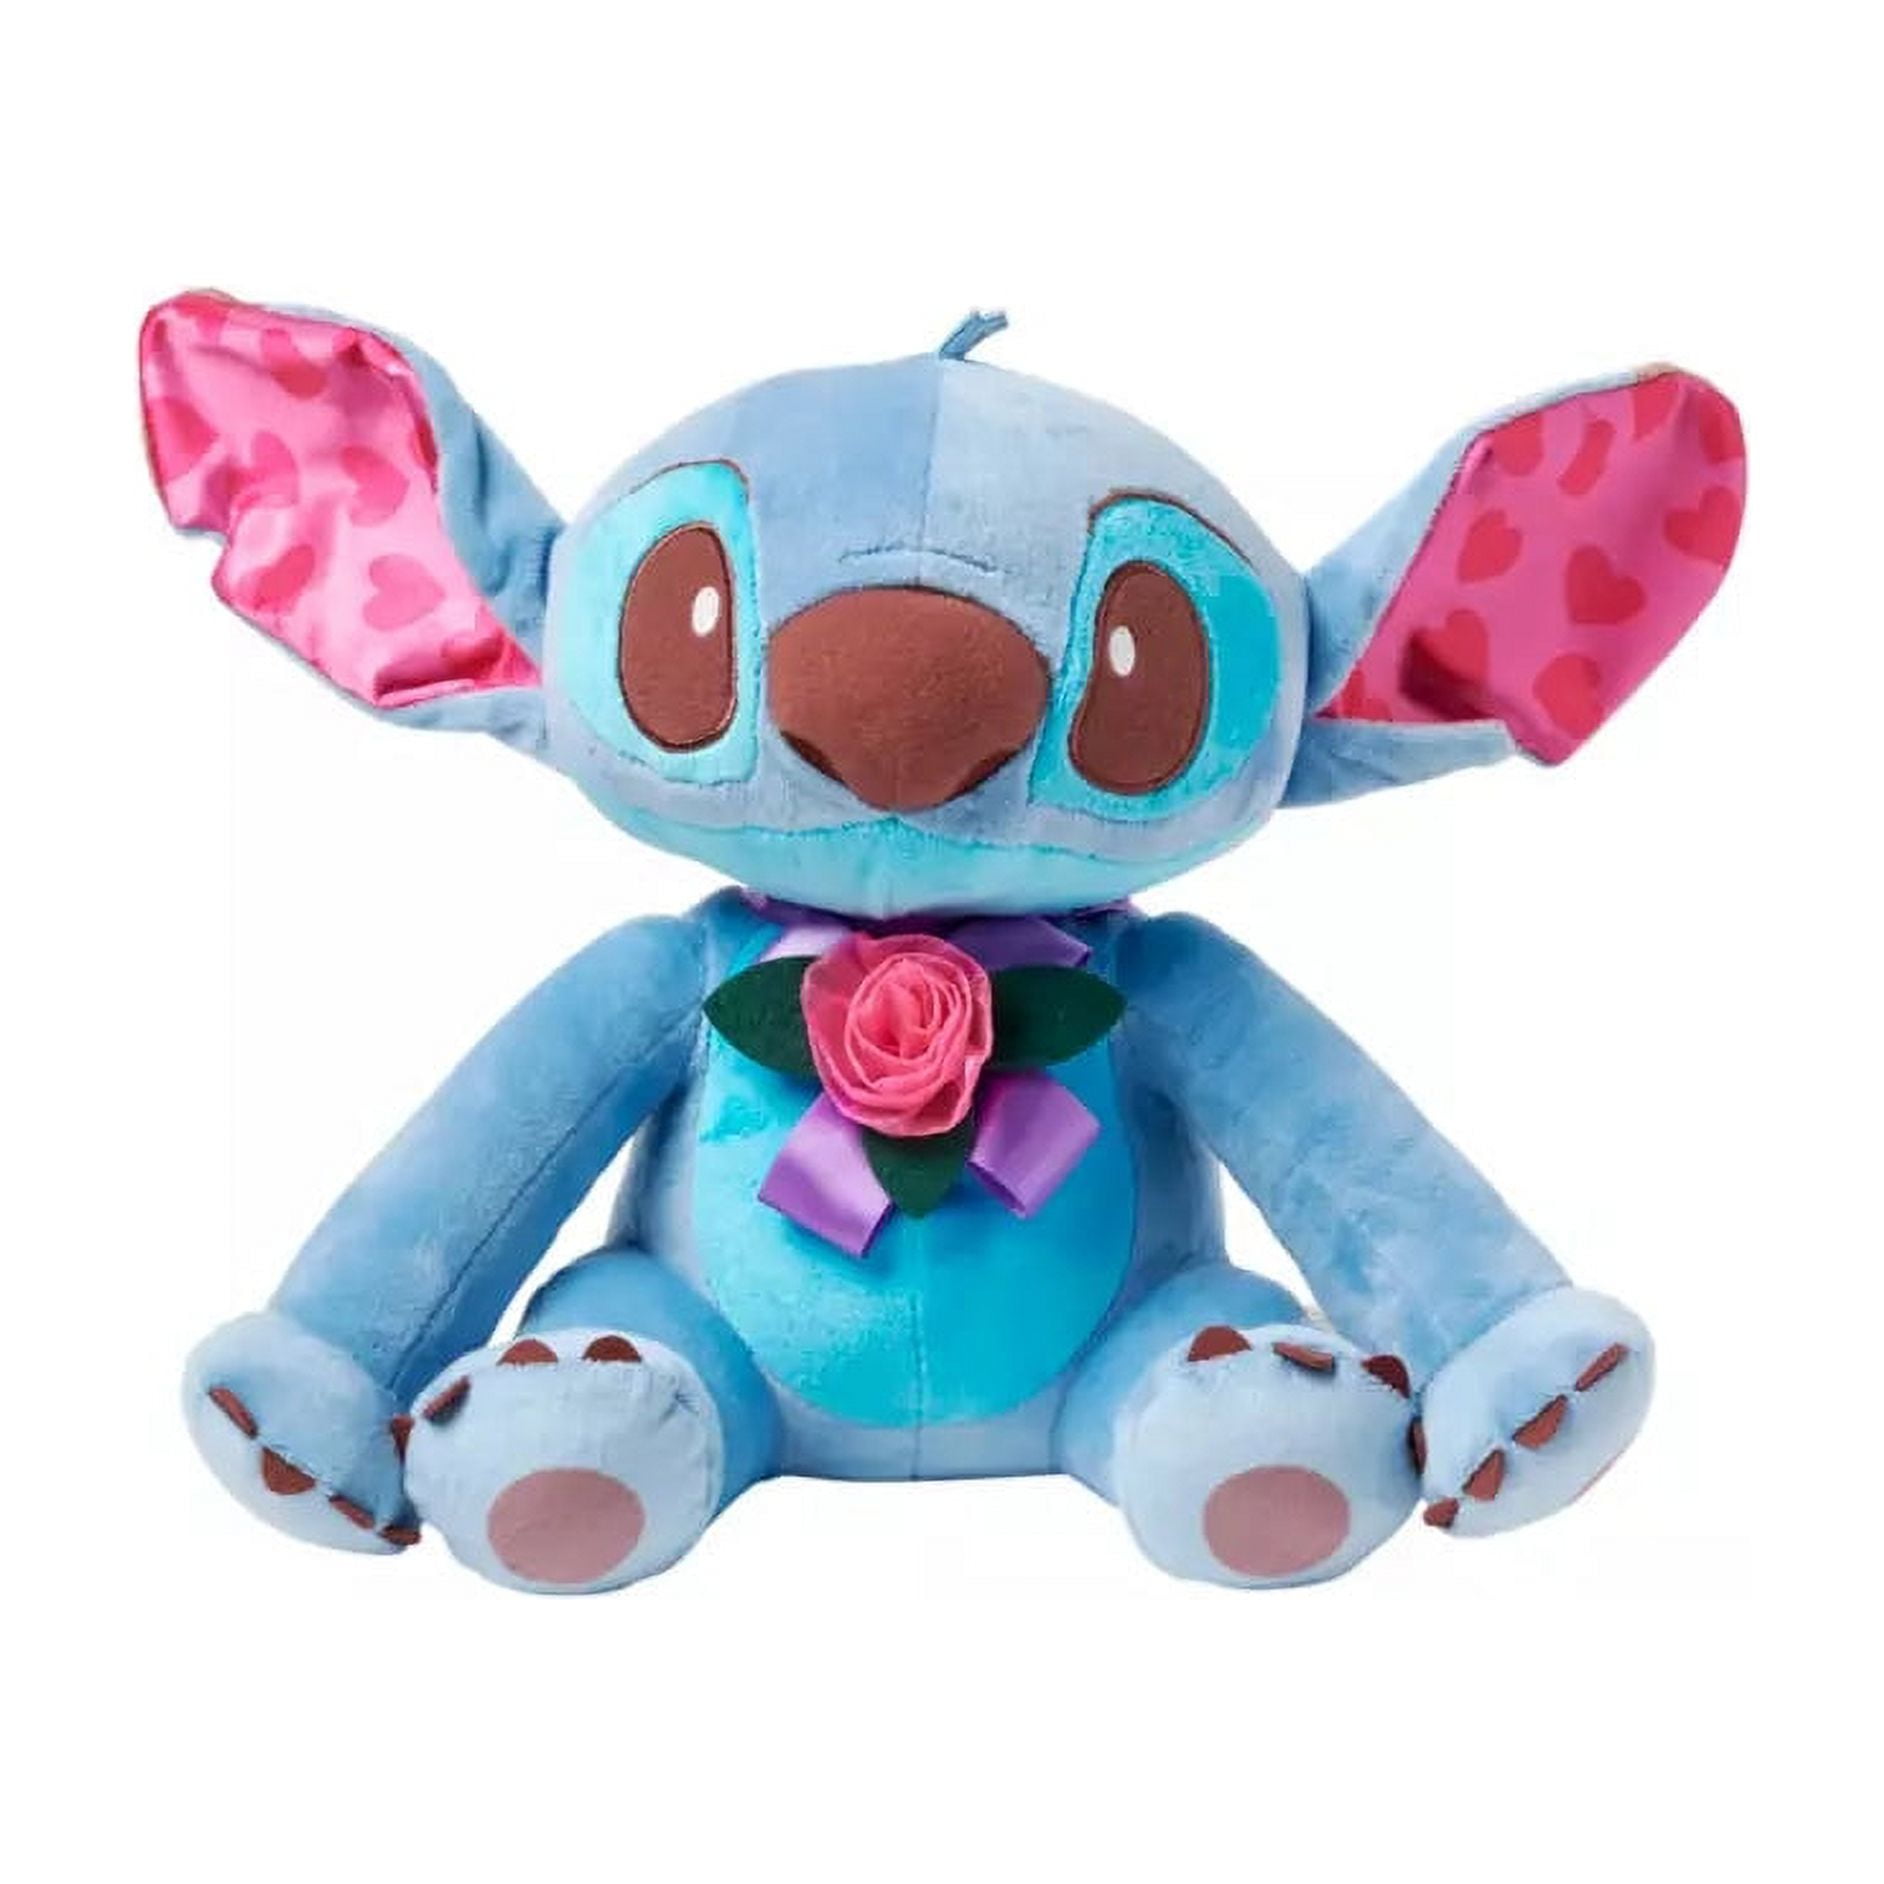 Disney Princess Valentines Gift Box W- Unicorn Plush